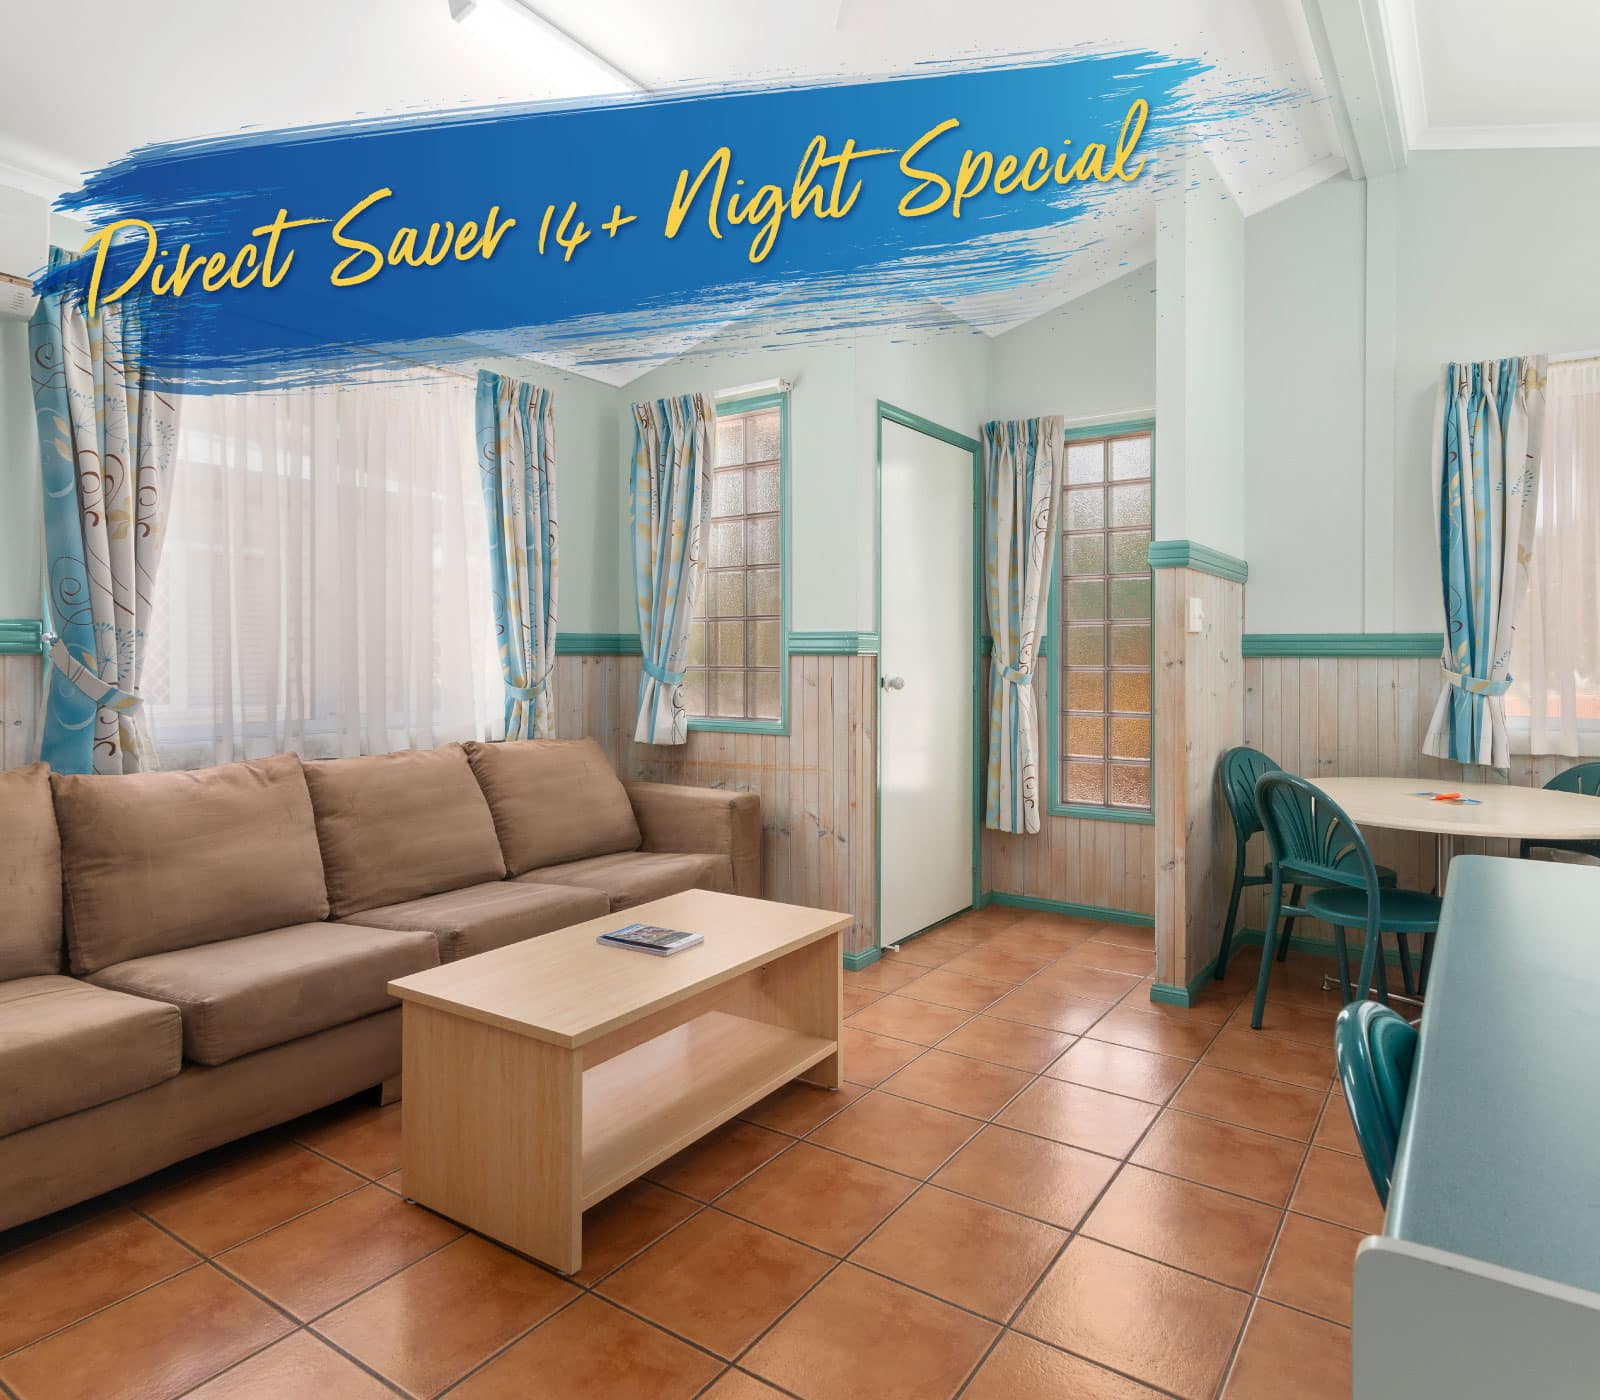 Direct Saver 14+ Night Accommodation Specials Gold Coast